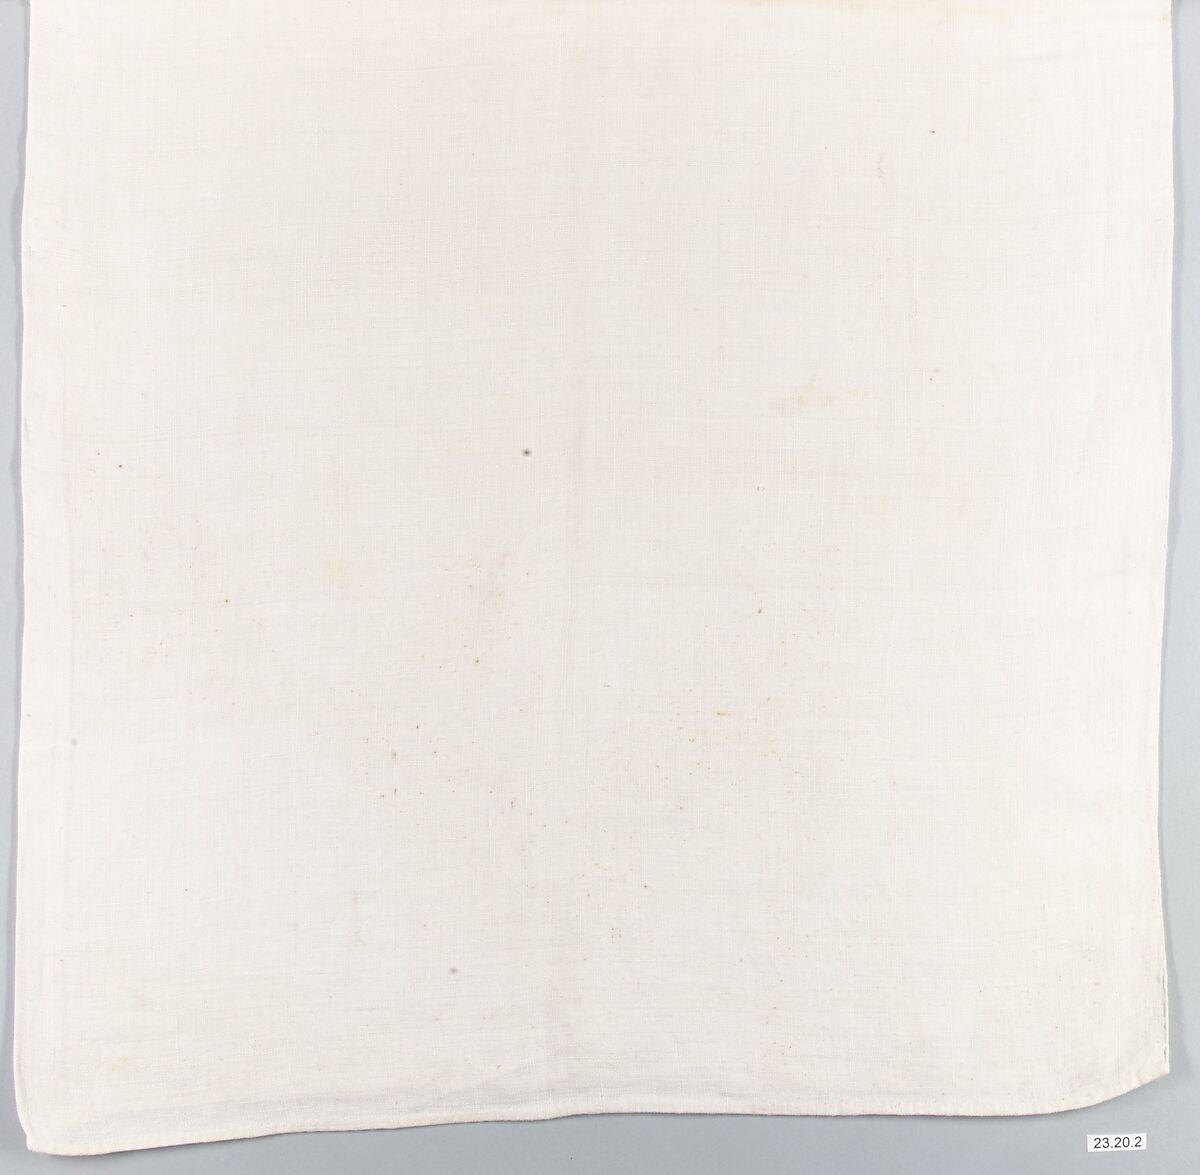 Pillow Slip, Probably Jane Simonton Chapman (born 1794), Linen, woven, American 